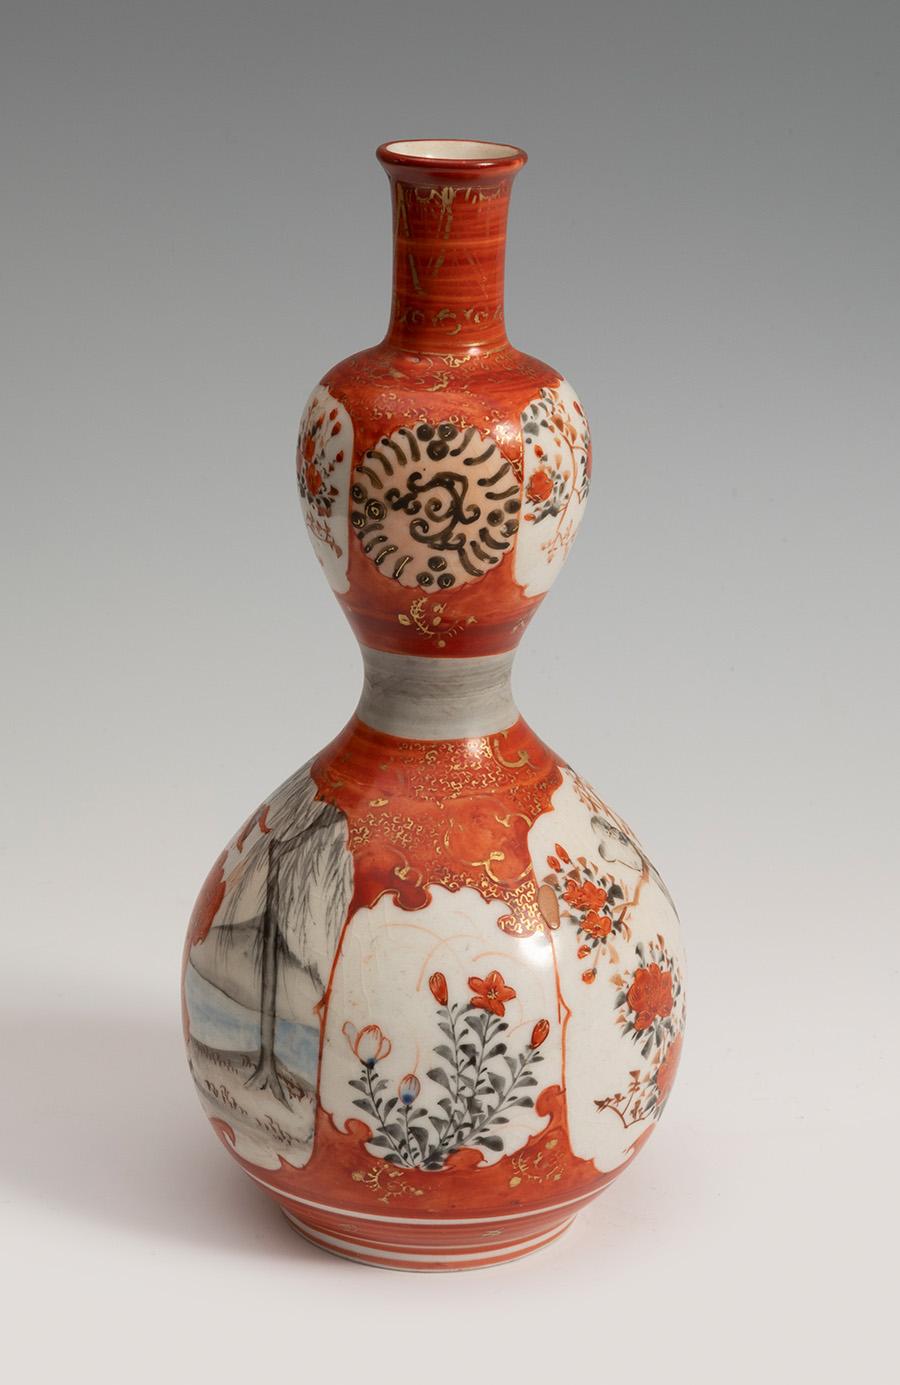 Late 19h century Japanese Kutani double gourd form glazed porcelain vase with vignette decoration depicting a man, bird and plants.